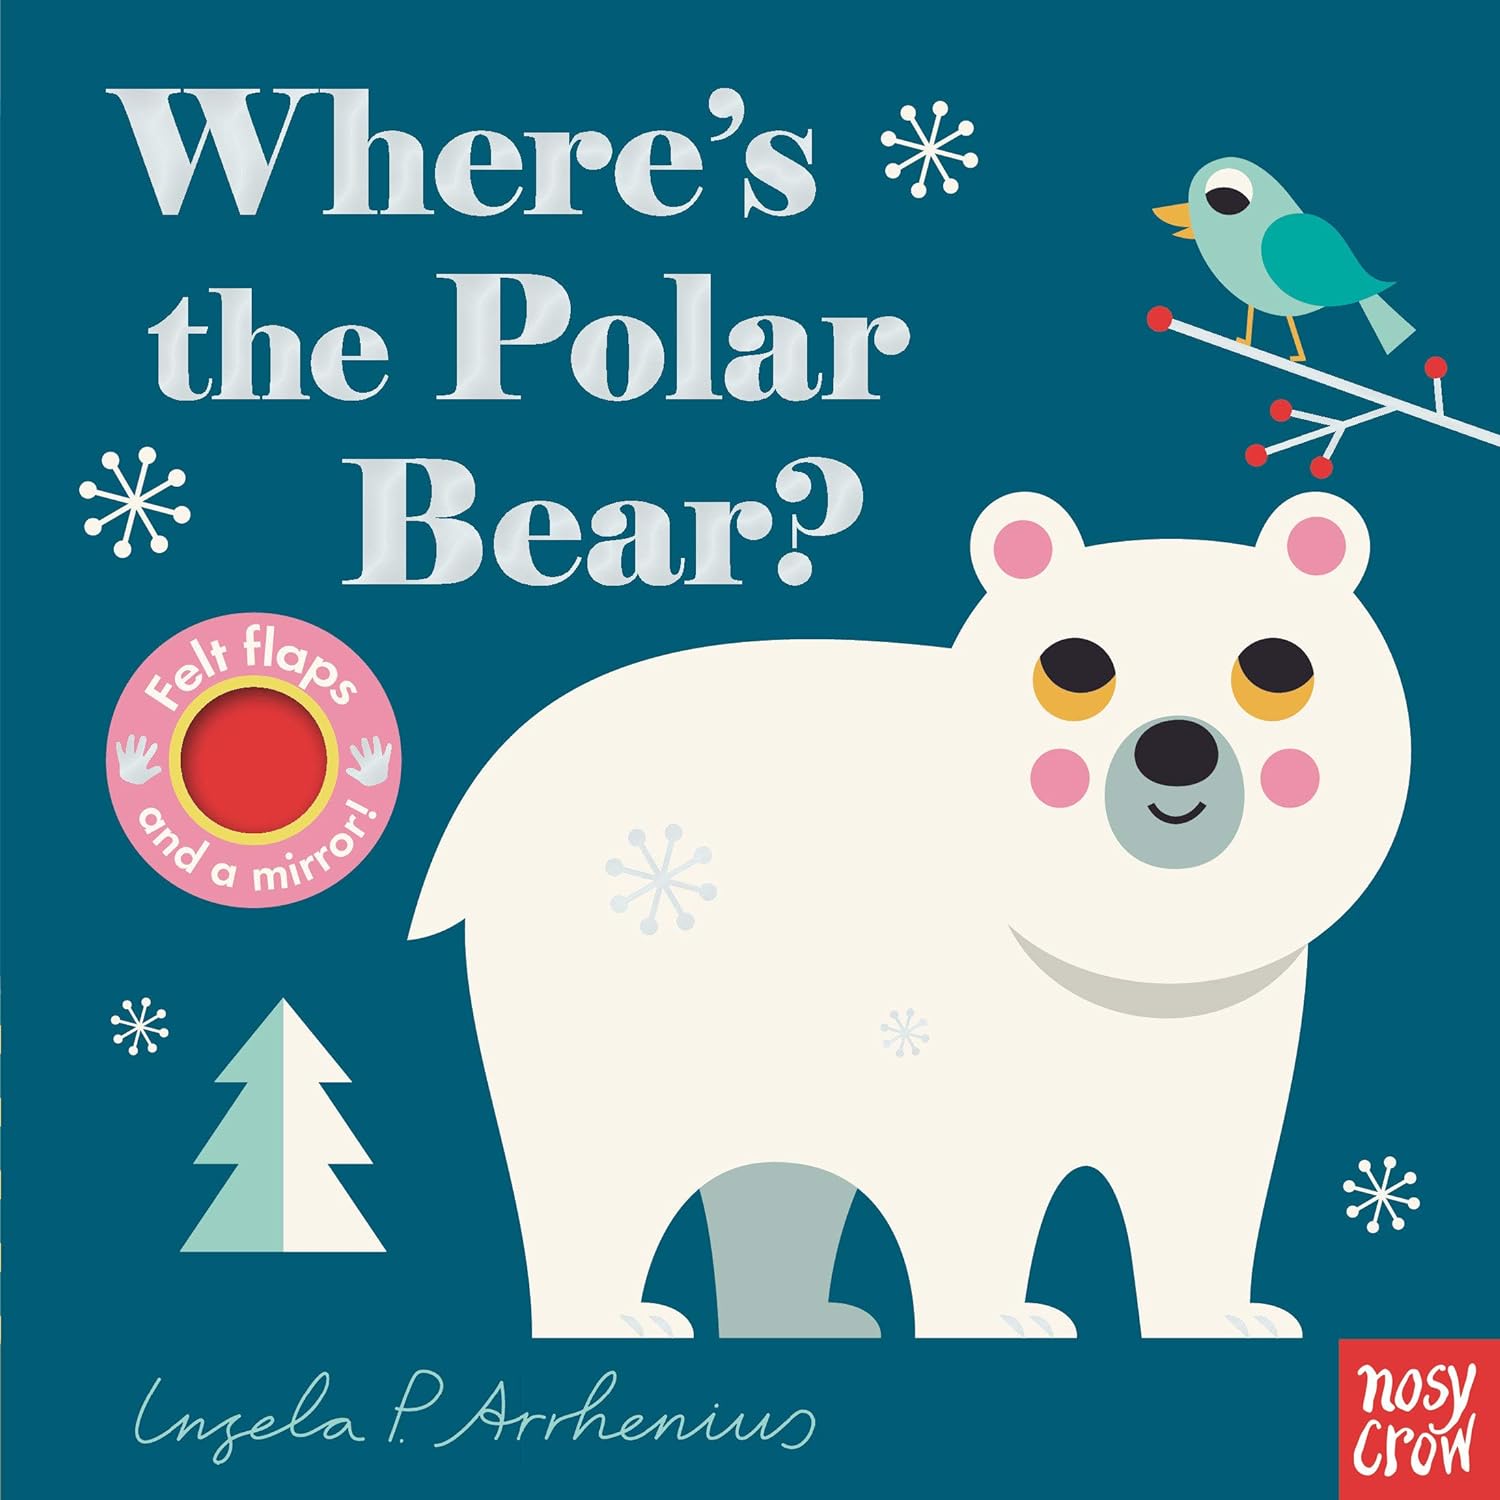 81Za3o1ccZL._SL1500_ Polar Bear Books for Toddlers